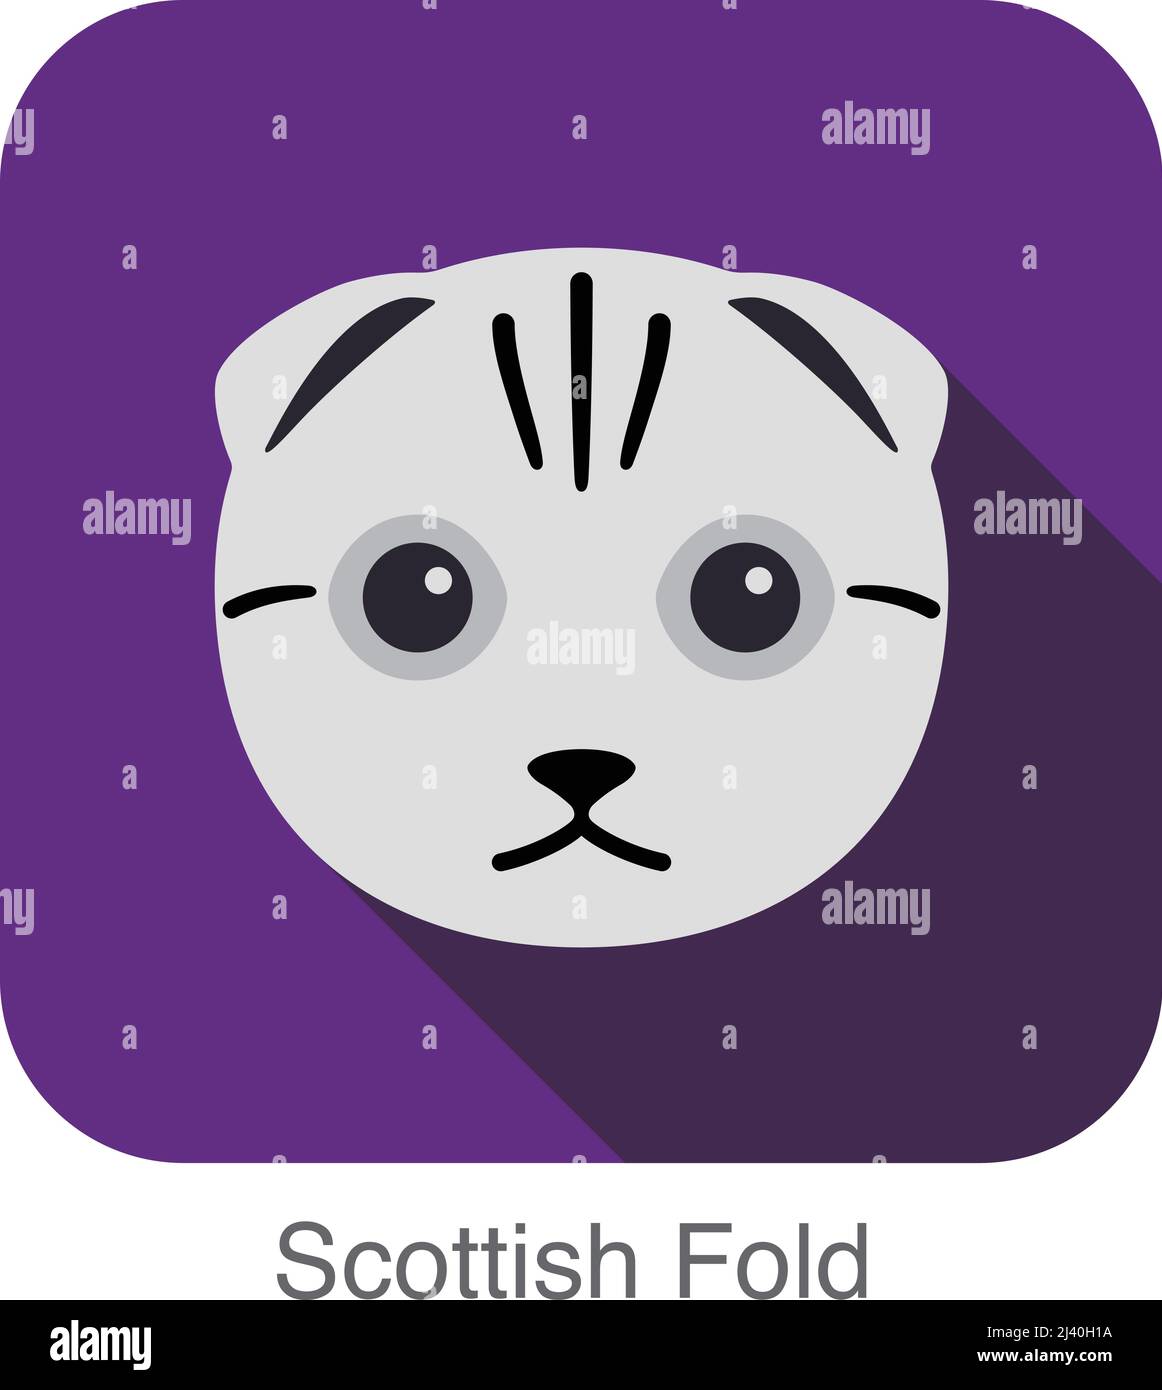 Scottish Fold, Cat breed face cartoon flat icon design Stock Vector